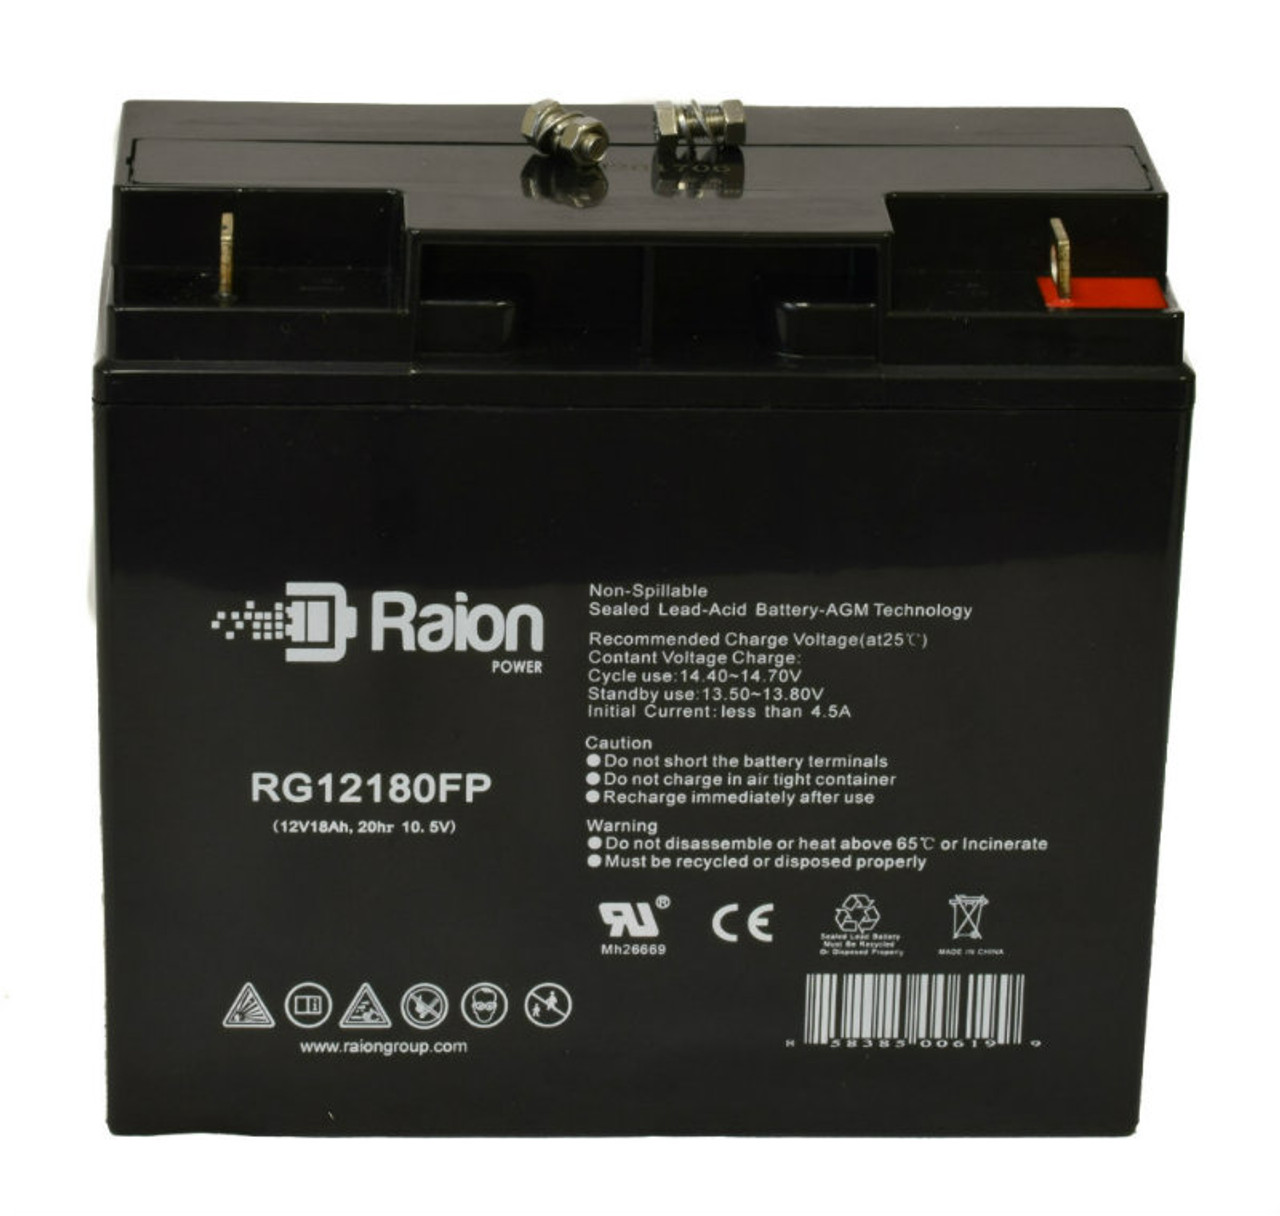 Raion Power RG12180FP 12V 18Ah Lead Acid Battery for Ecolo ET-3-LS